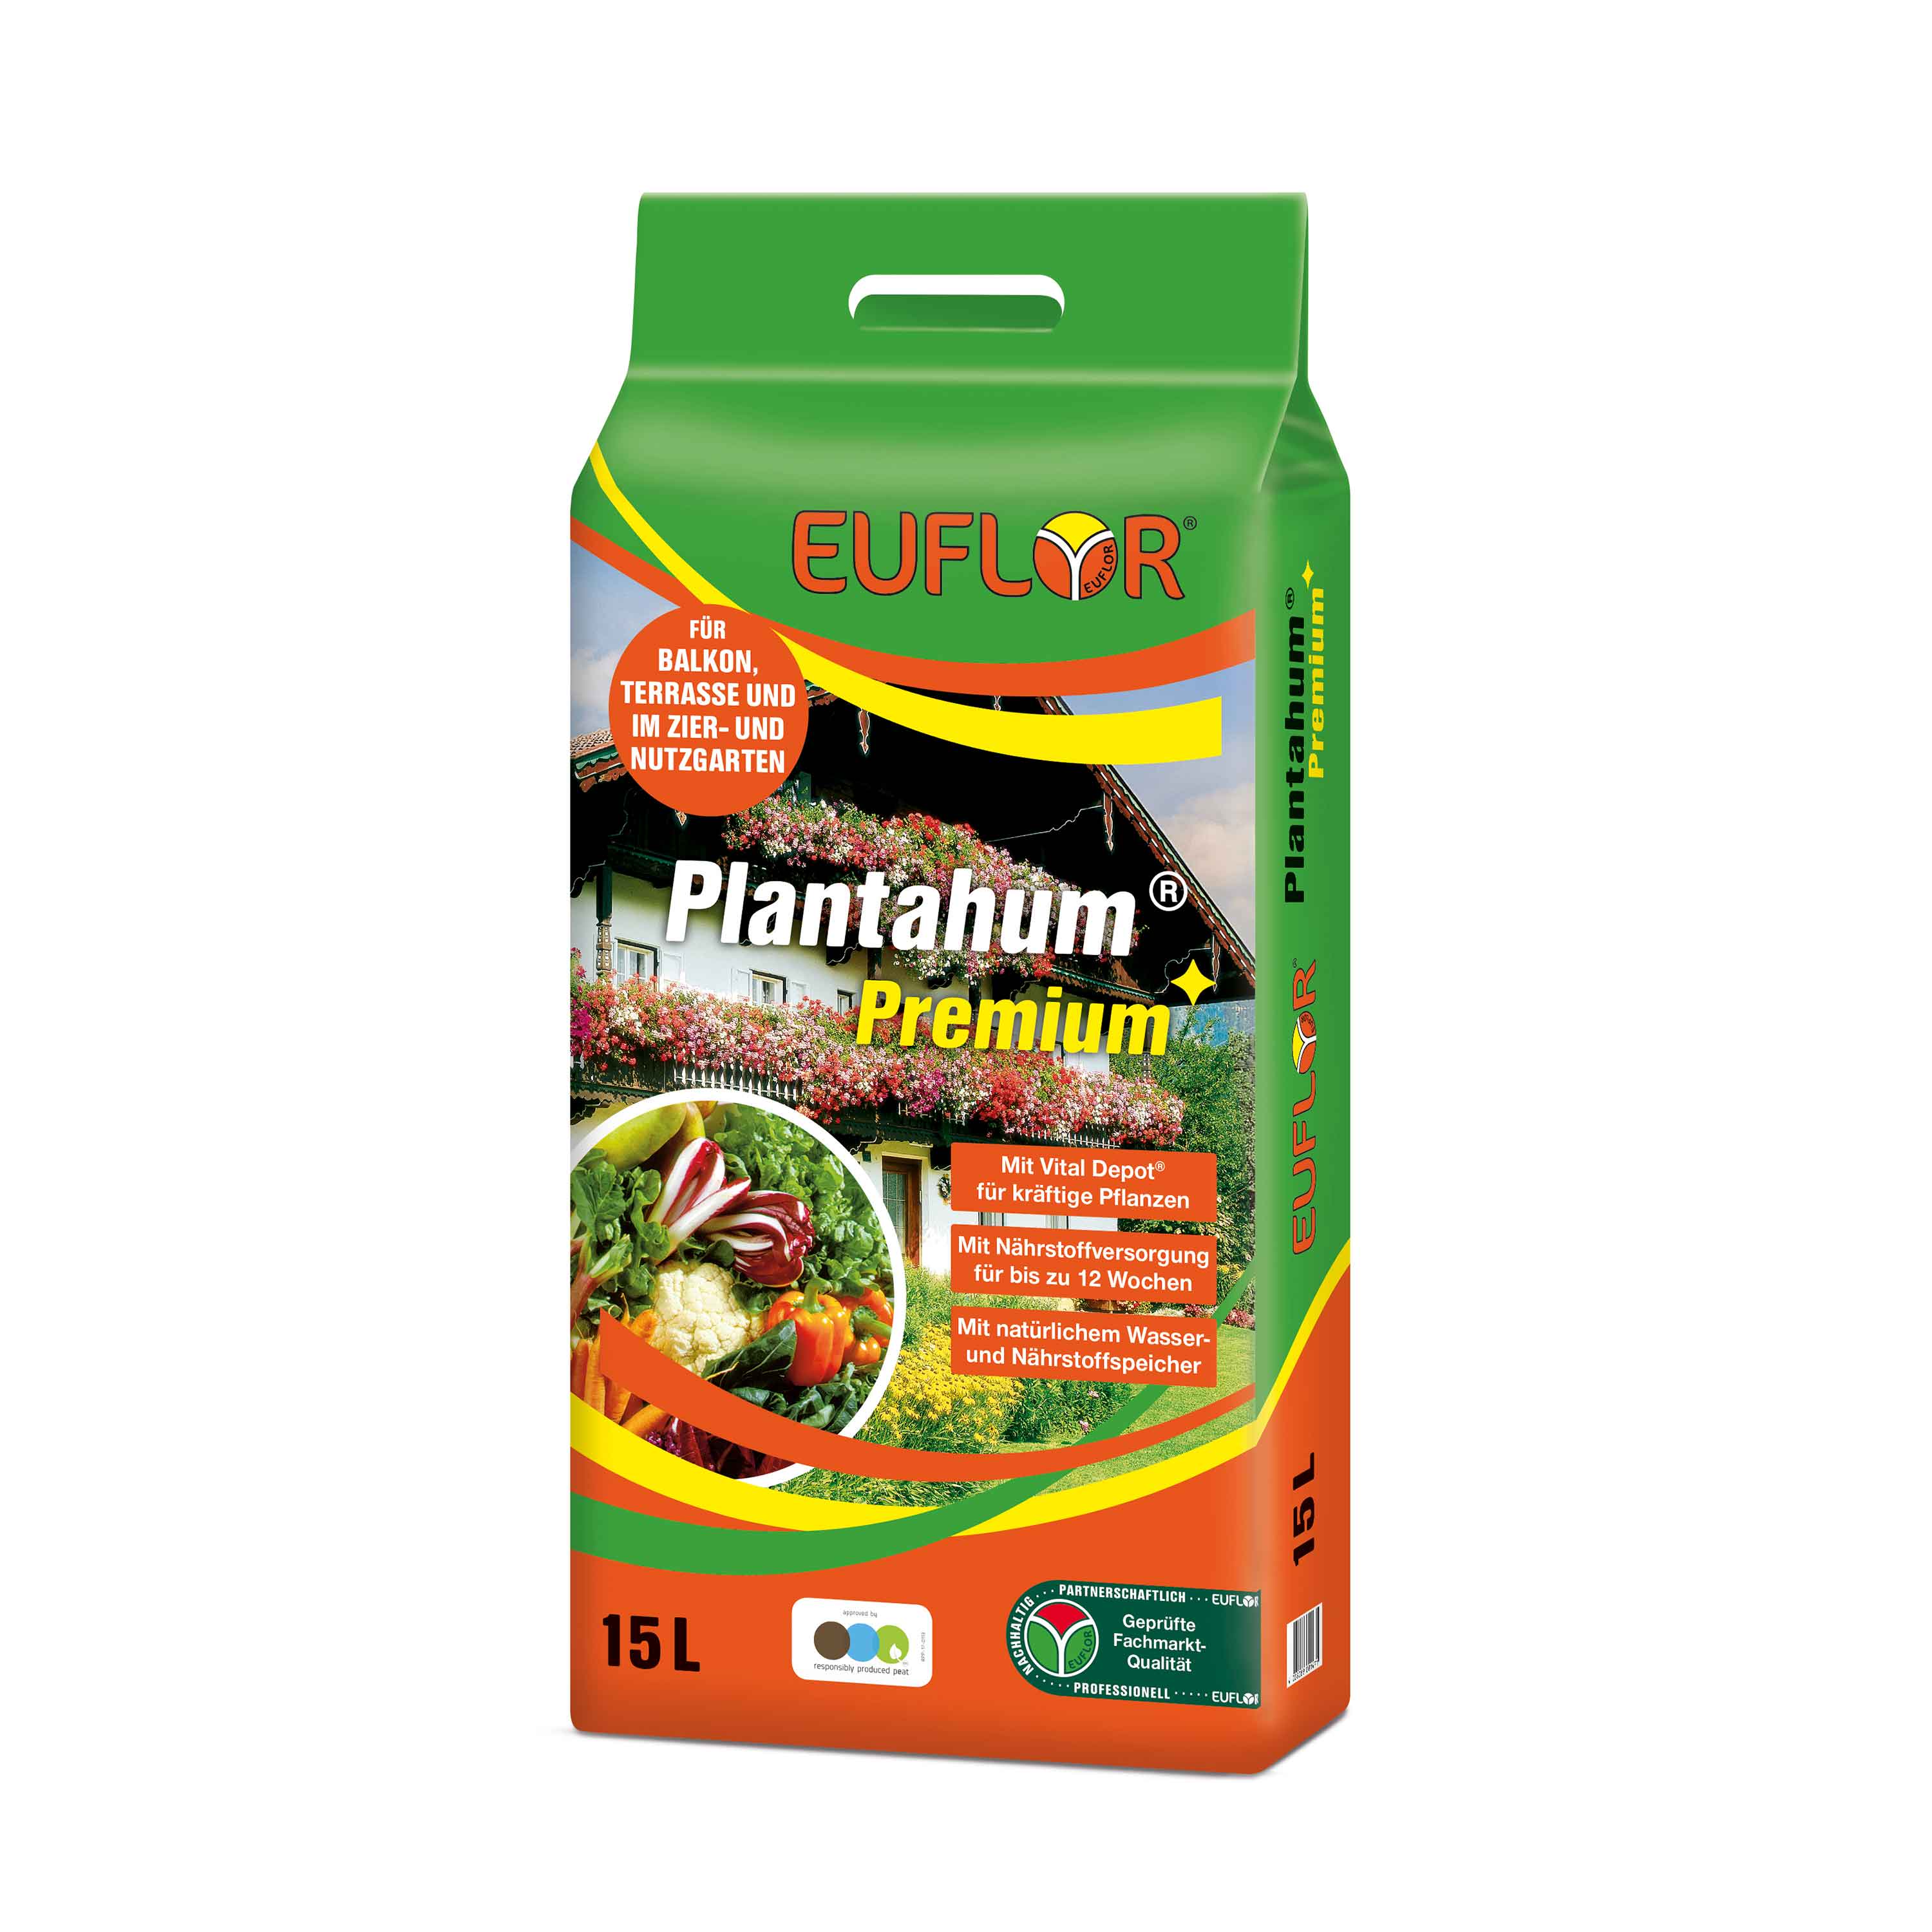 EUFLOR Pflanzerde Plantahum Premium - 15 Liter Tragebeutel